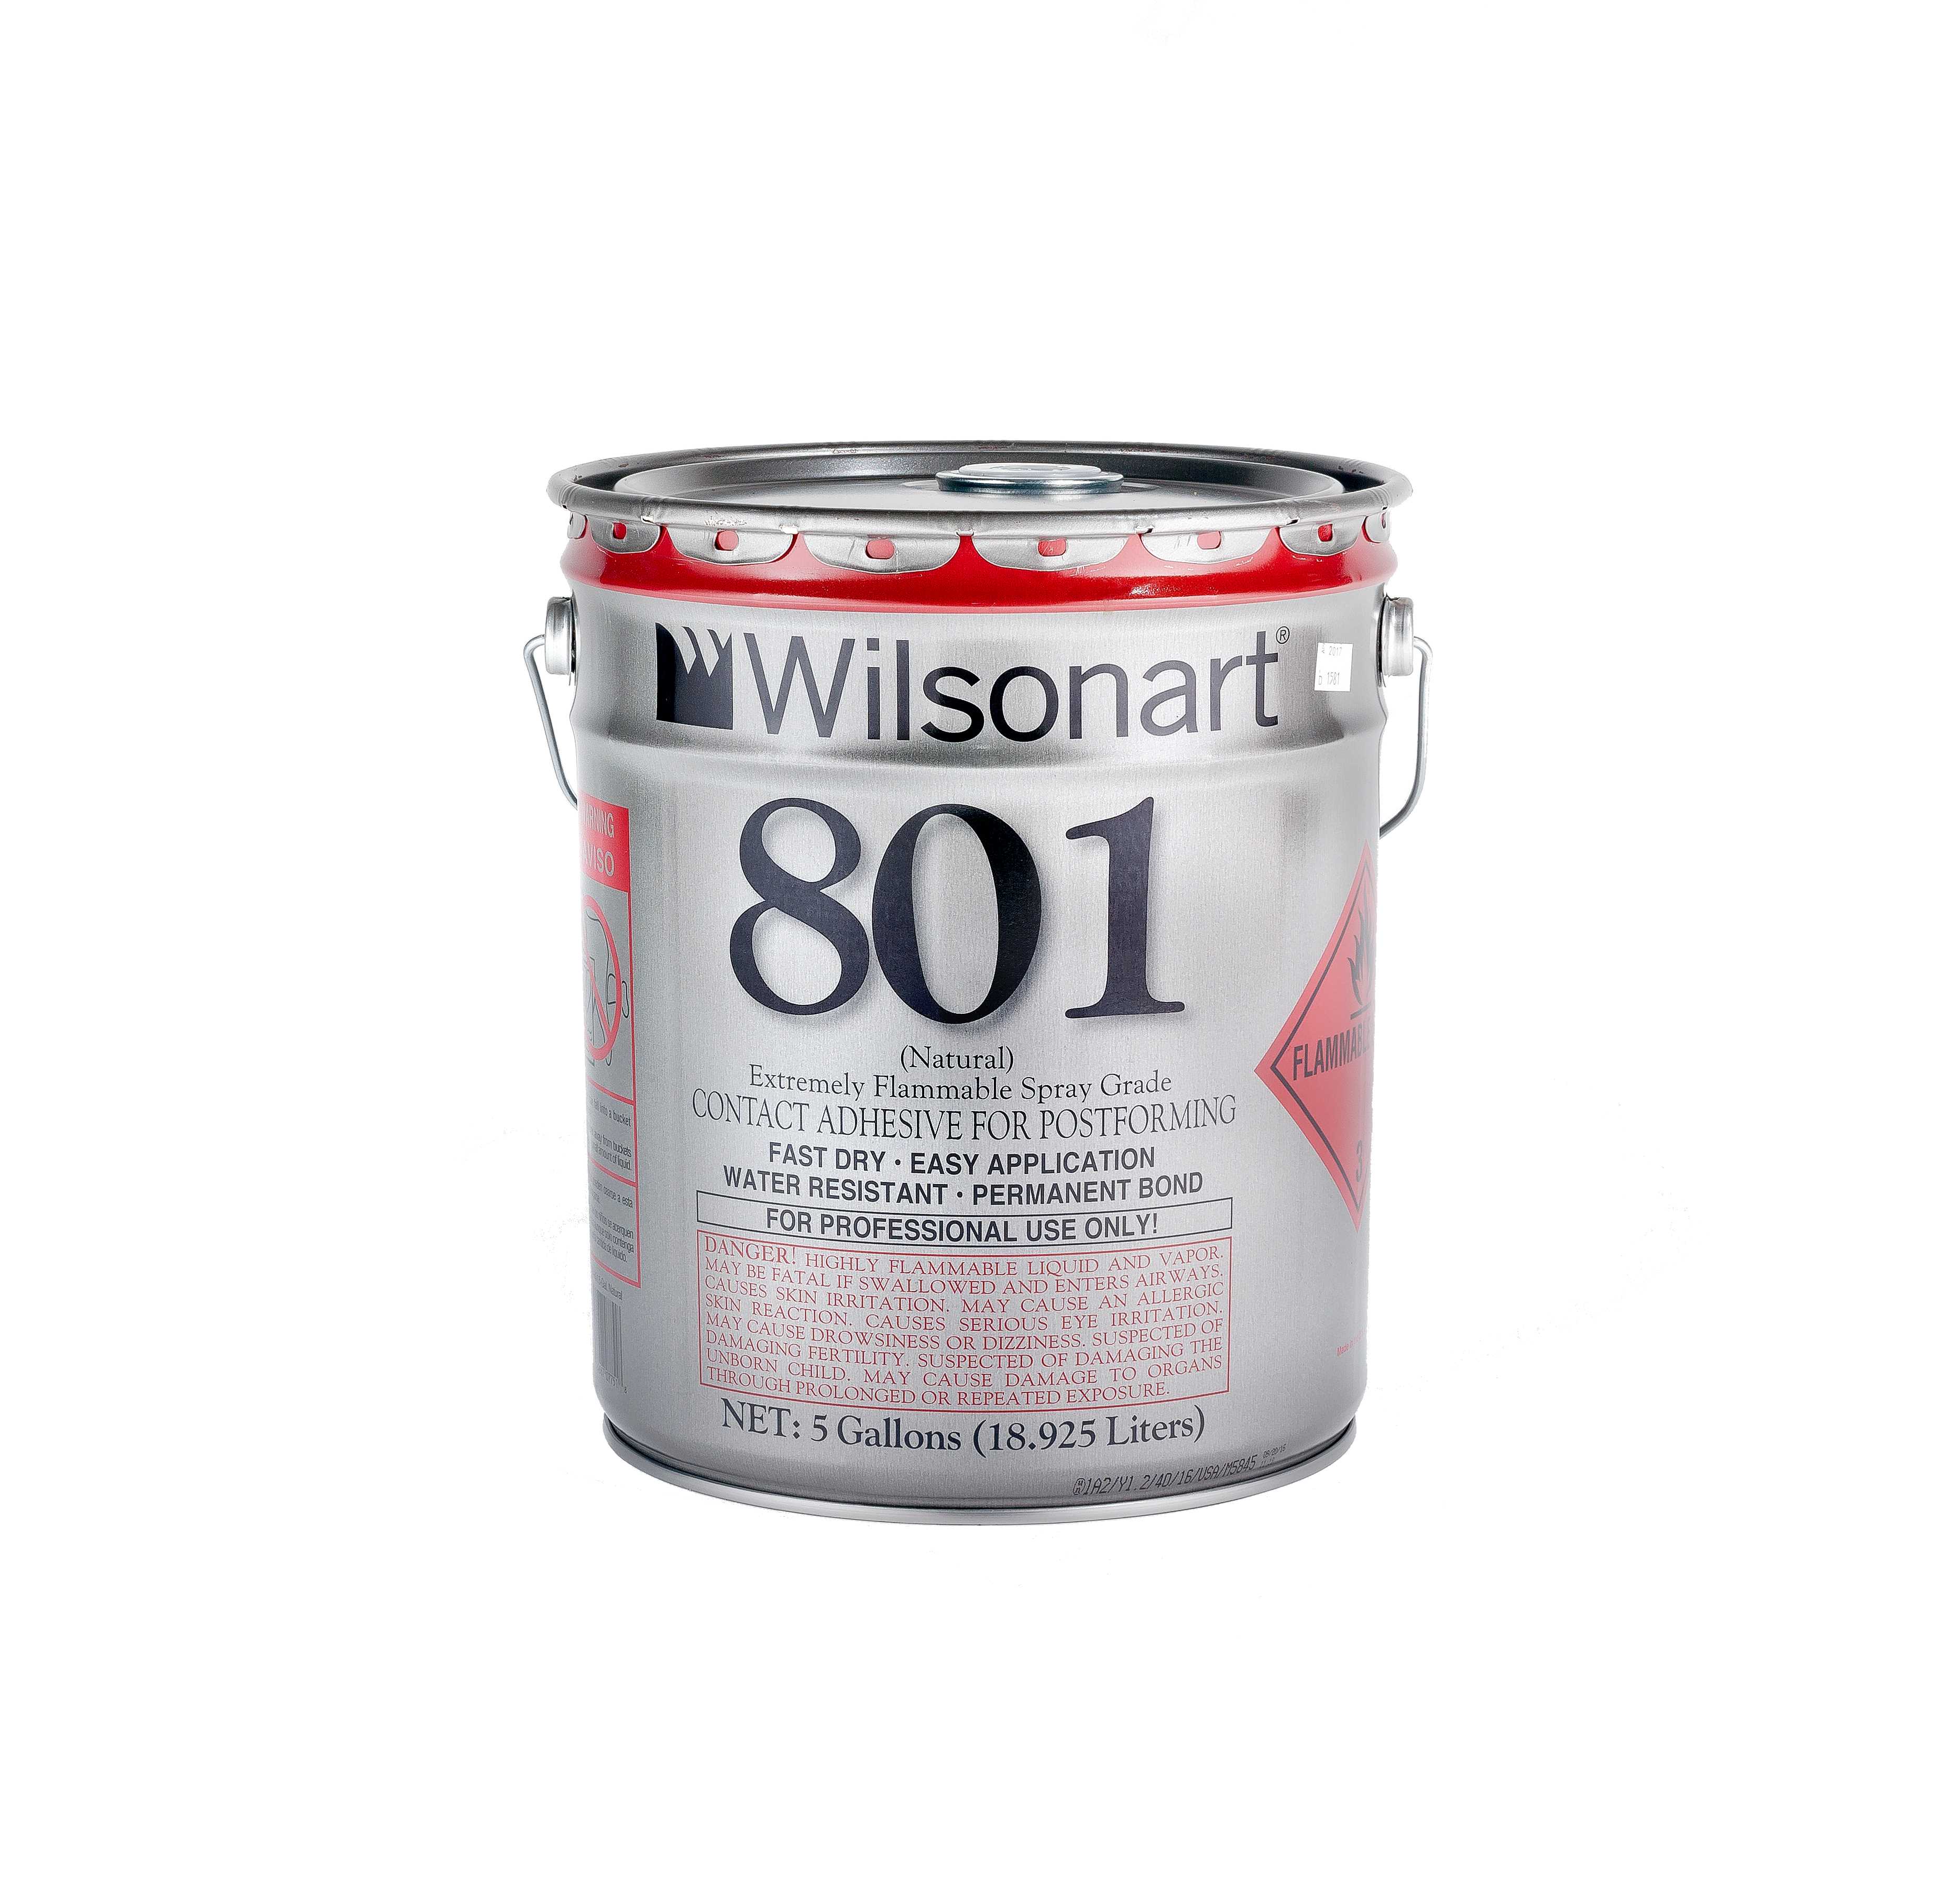 Wilsonart AD WA 801 CLEAR Wilsonart 801 Postforming Spray Grade Contact